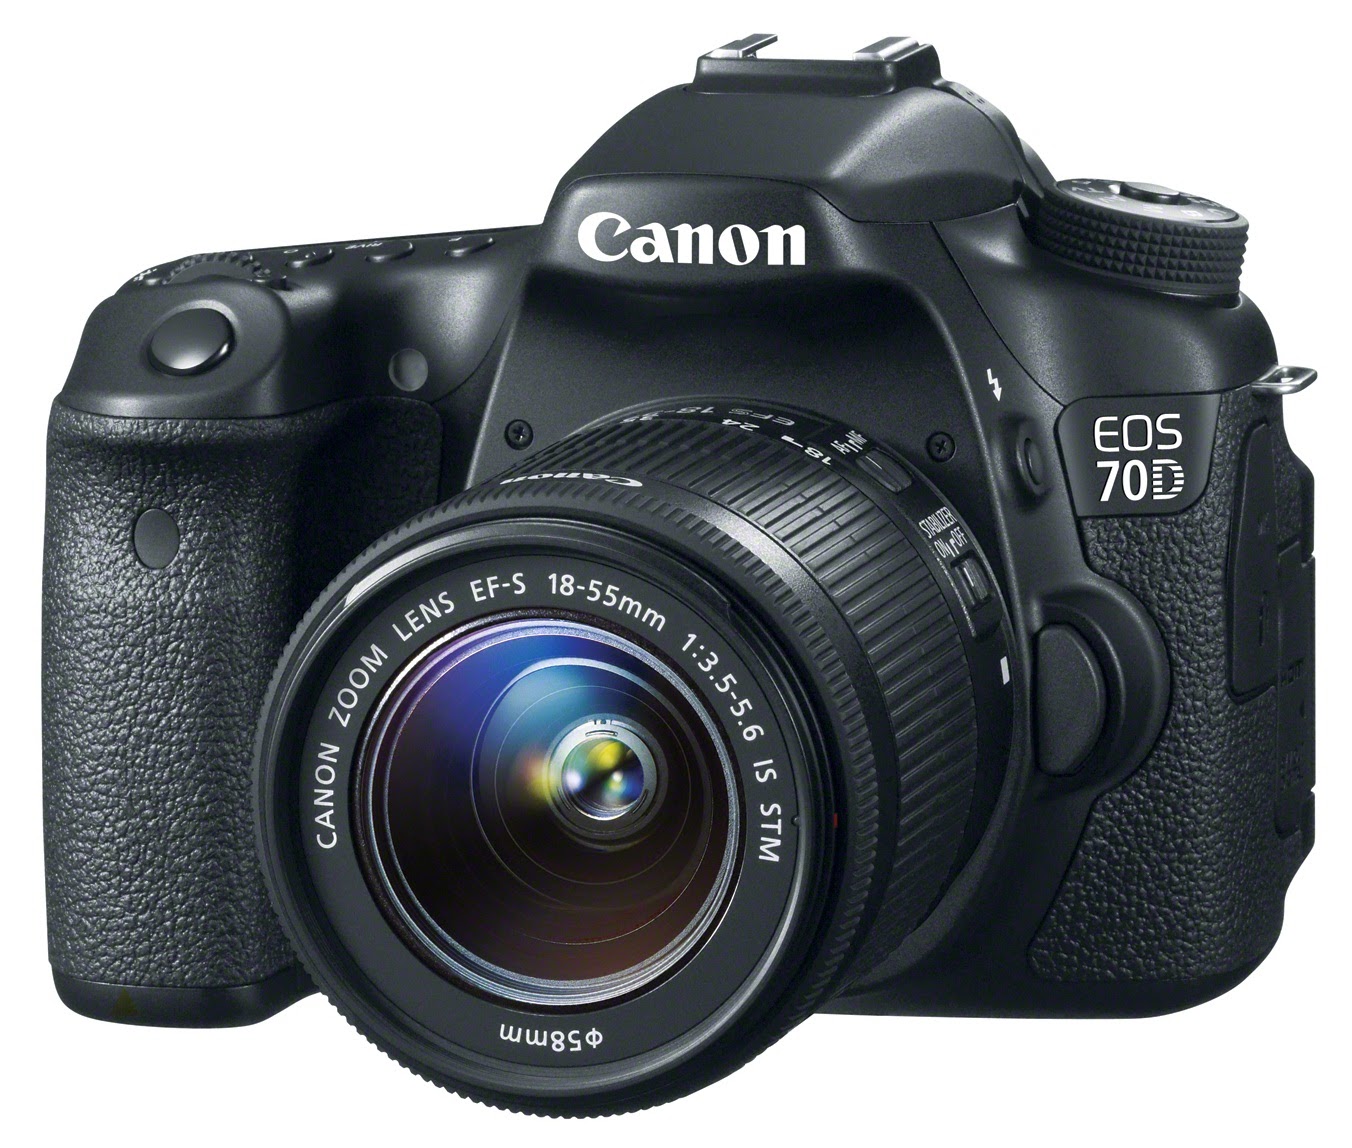 Harga terbaru kamera canon daftar harga kamera canon murah 